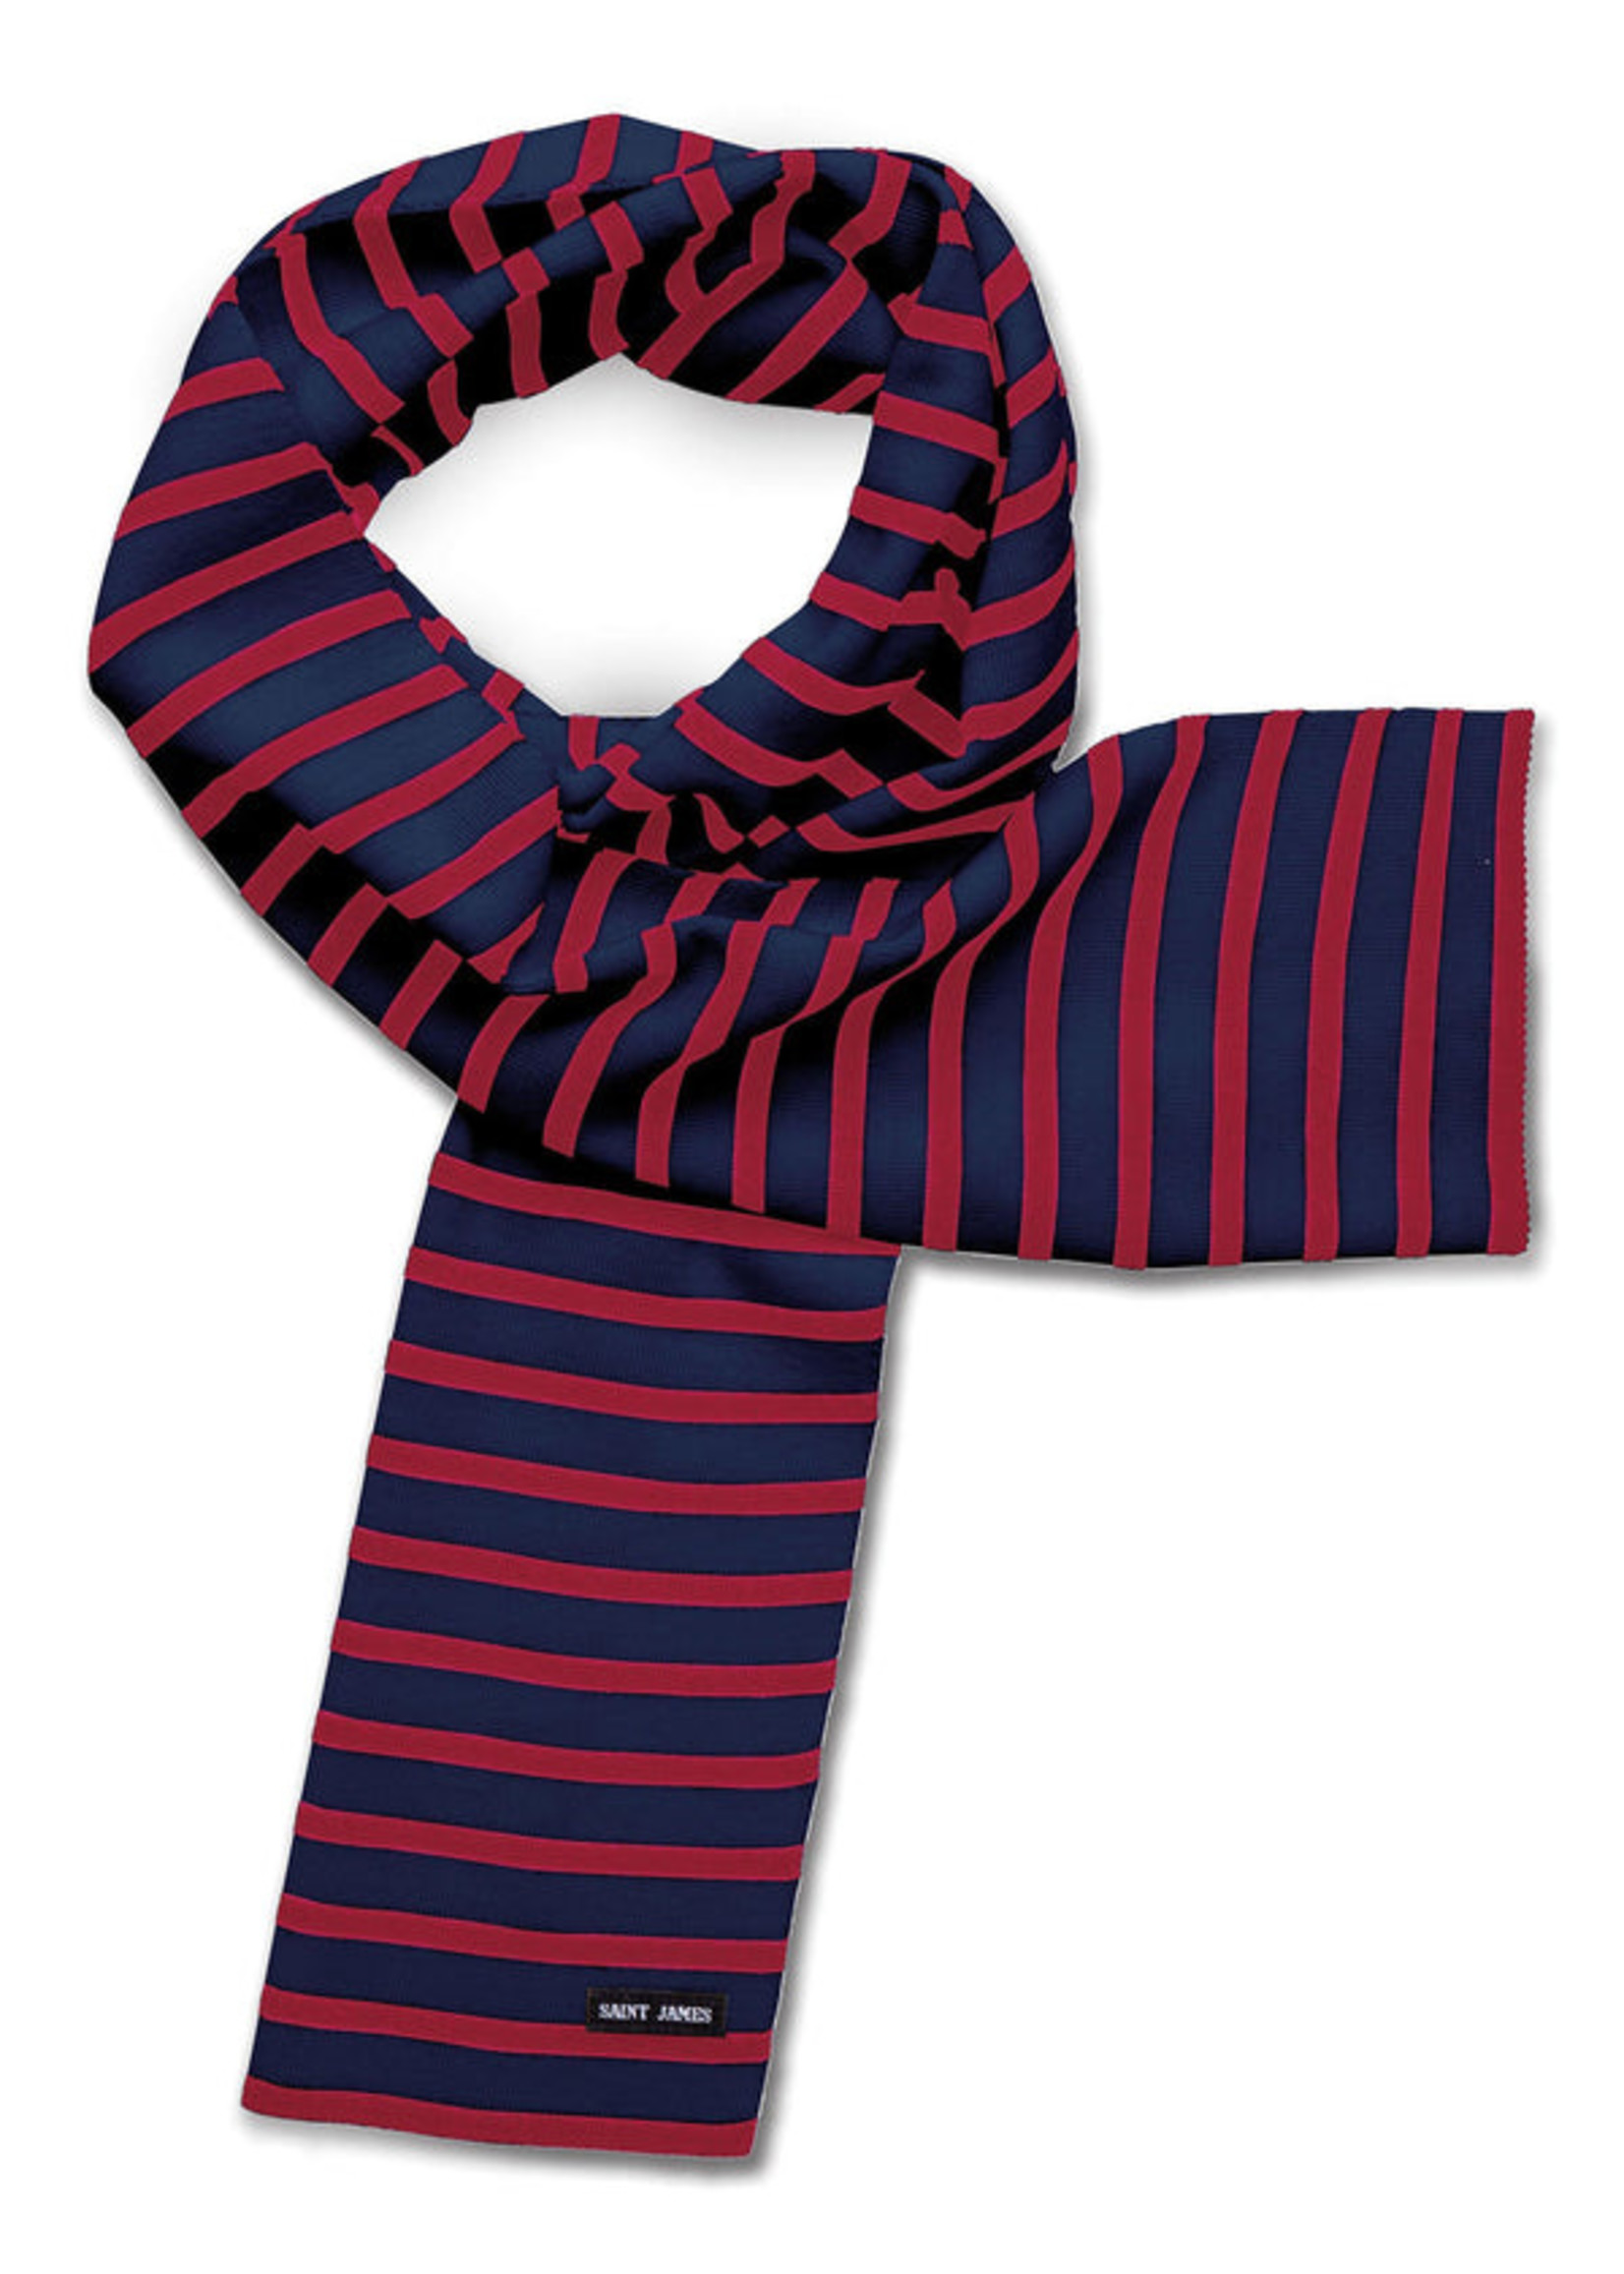 SAINT-JAMES Duguay striped scarf in wool blend